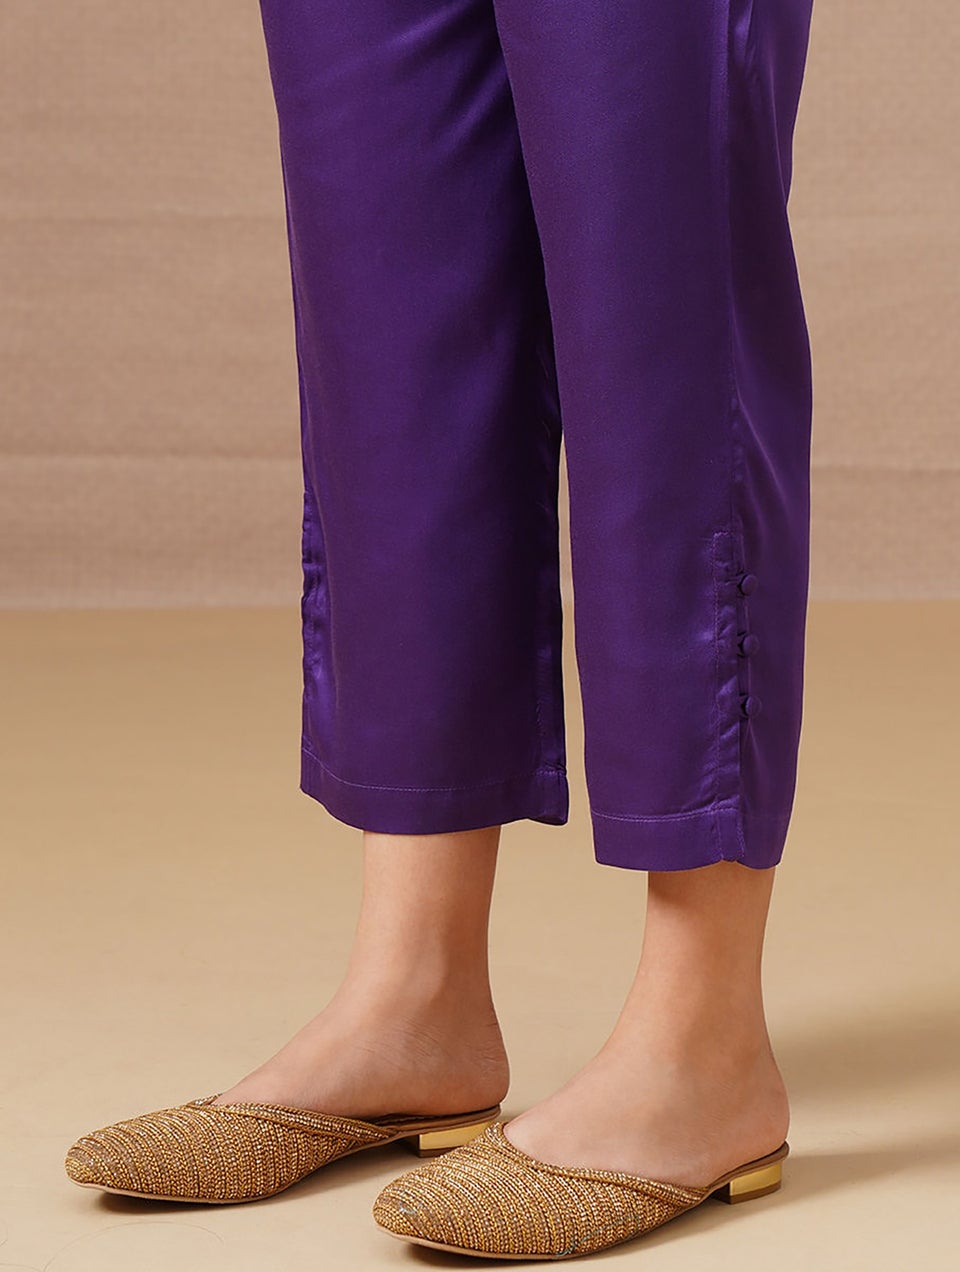 Purple Elasticated Waist Modal Pants - XS